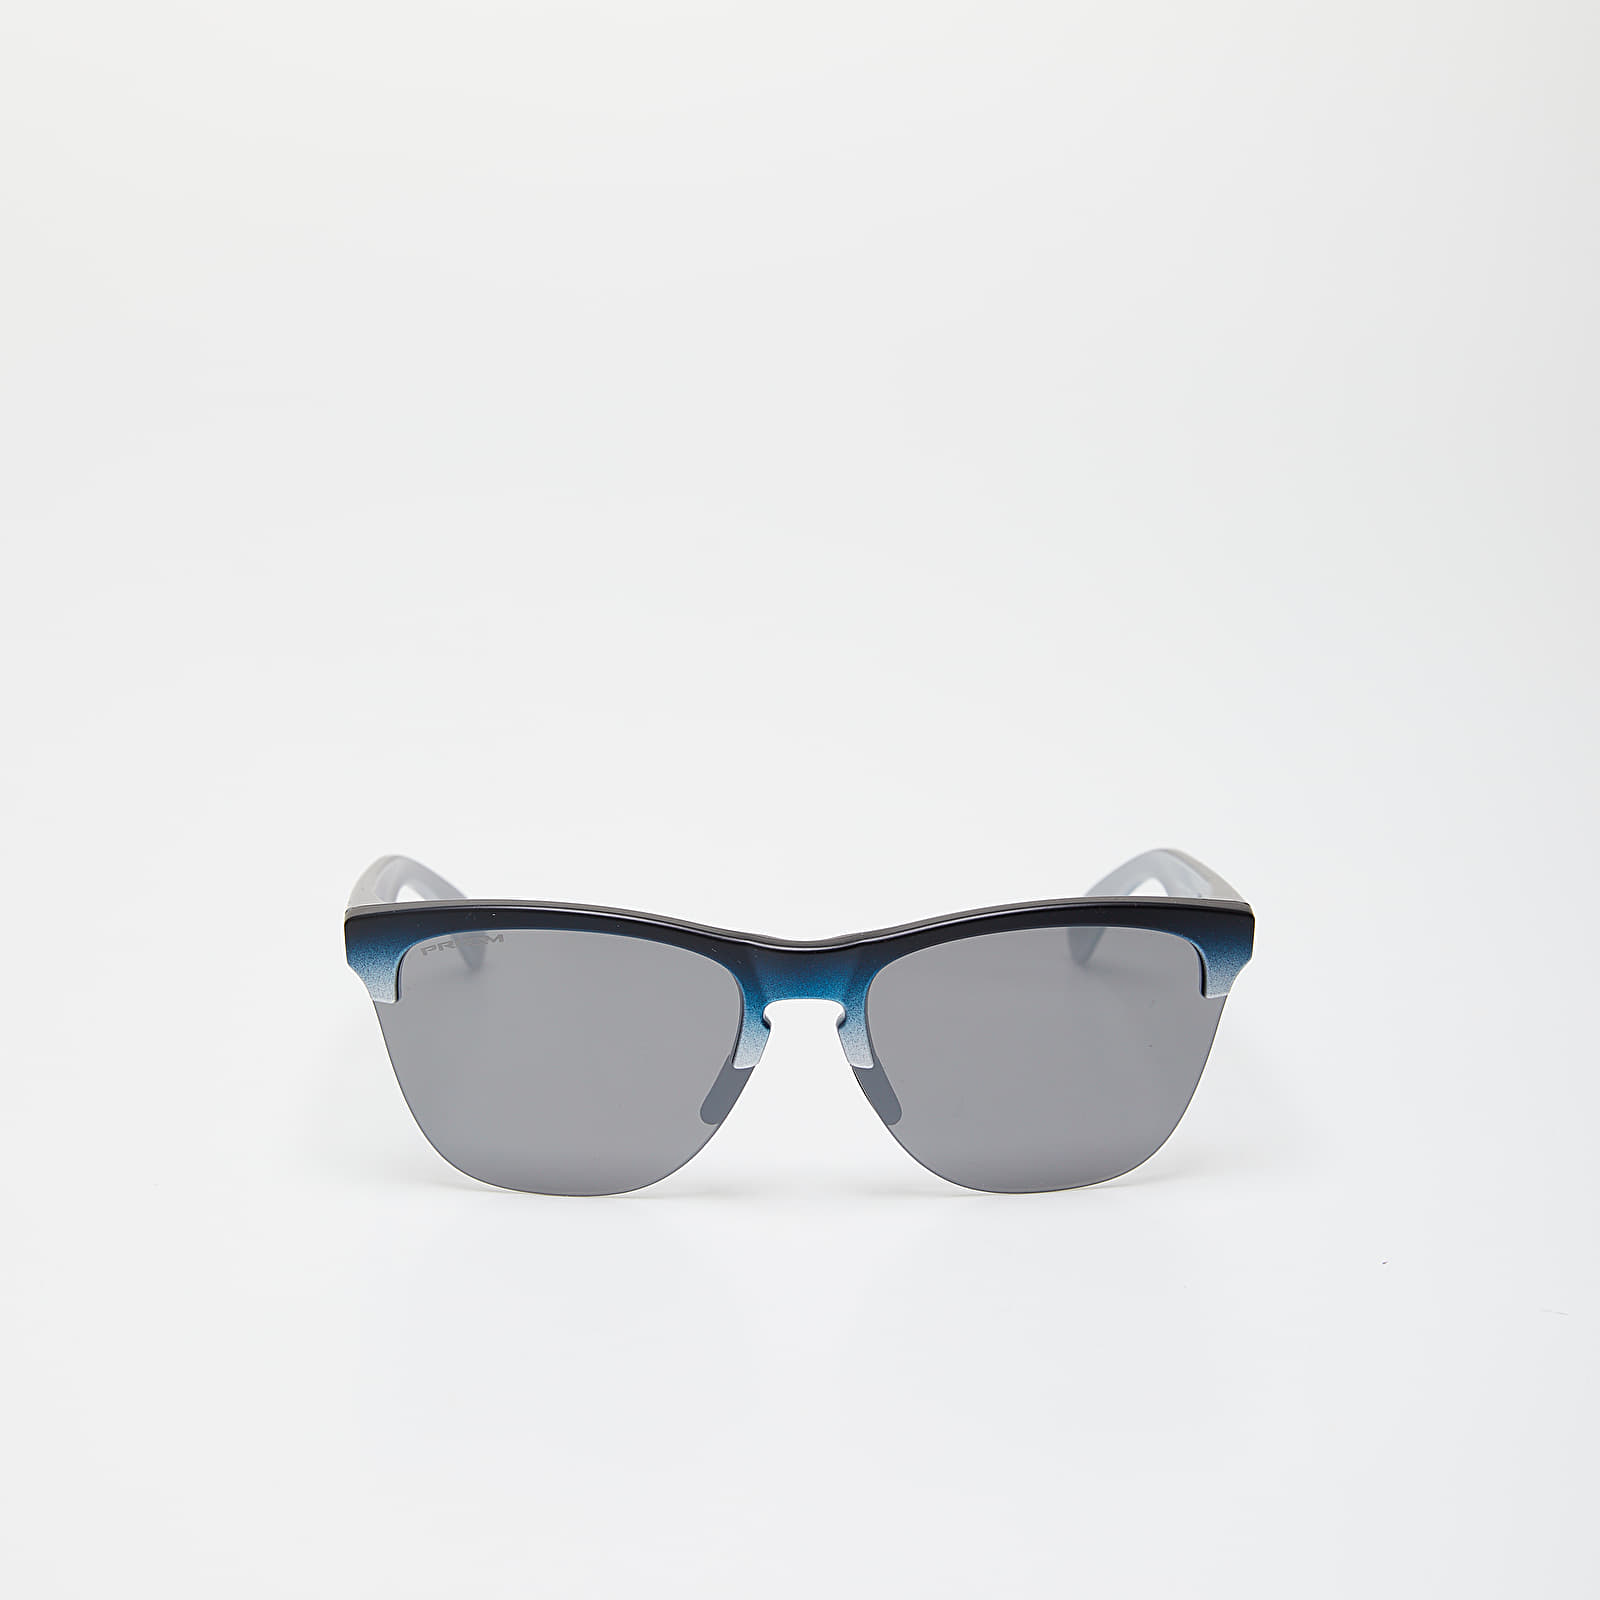 Sunglasses Oakley Frogskins Lite Splatterfade Sunglasses Black Teal/ Prizm Black Iridium